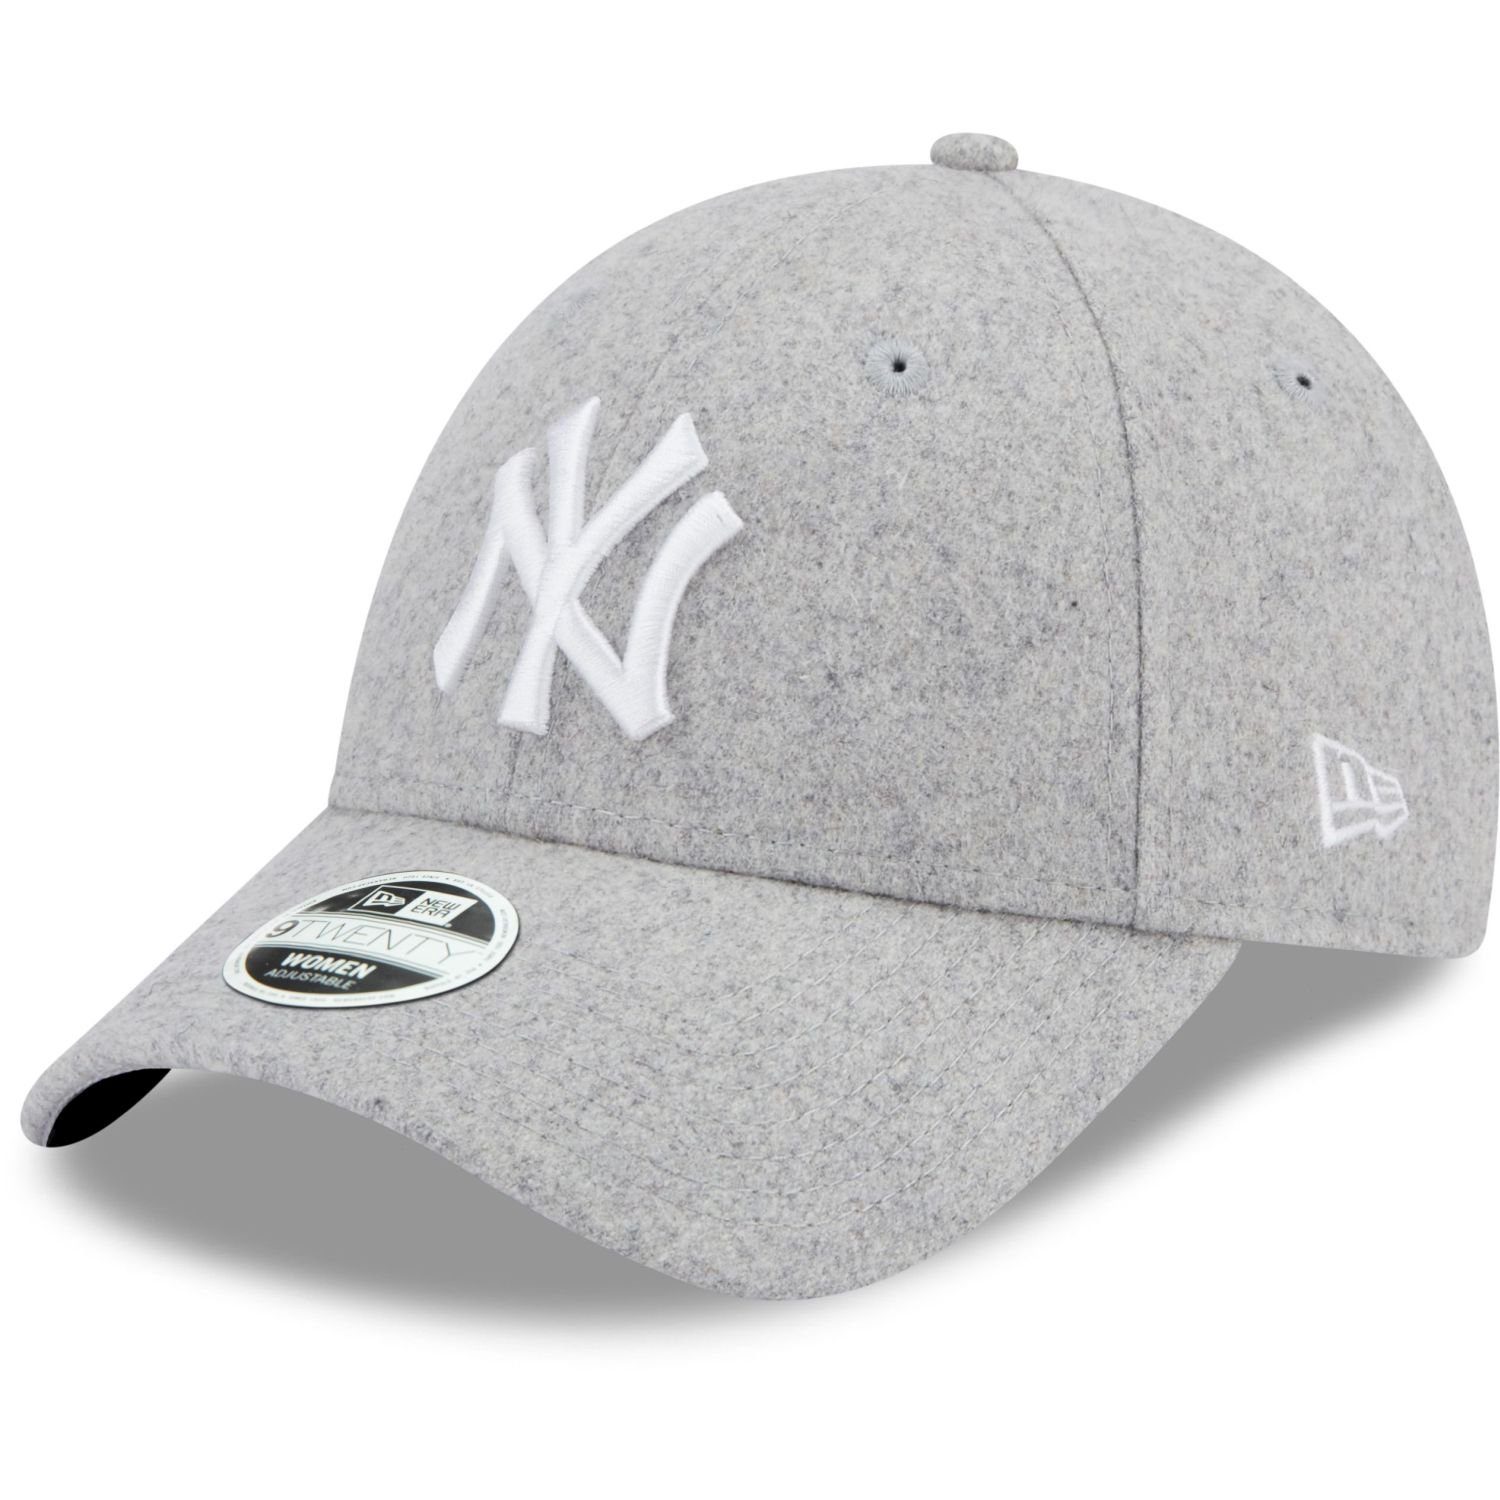 New Era Baseball Cap 9Forty WOOL New York Yankees